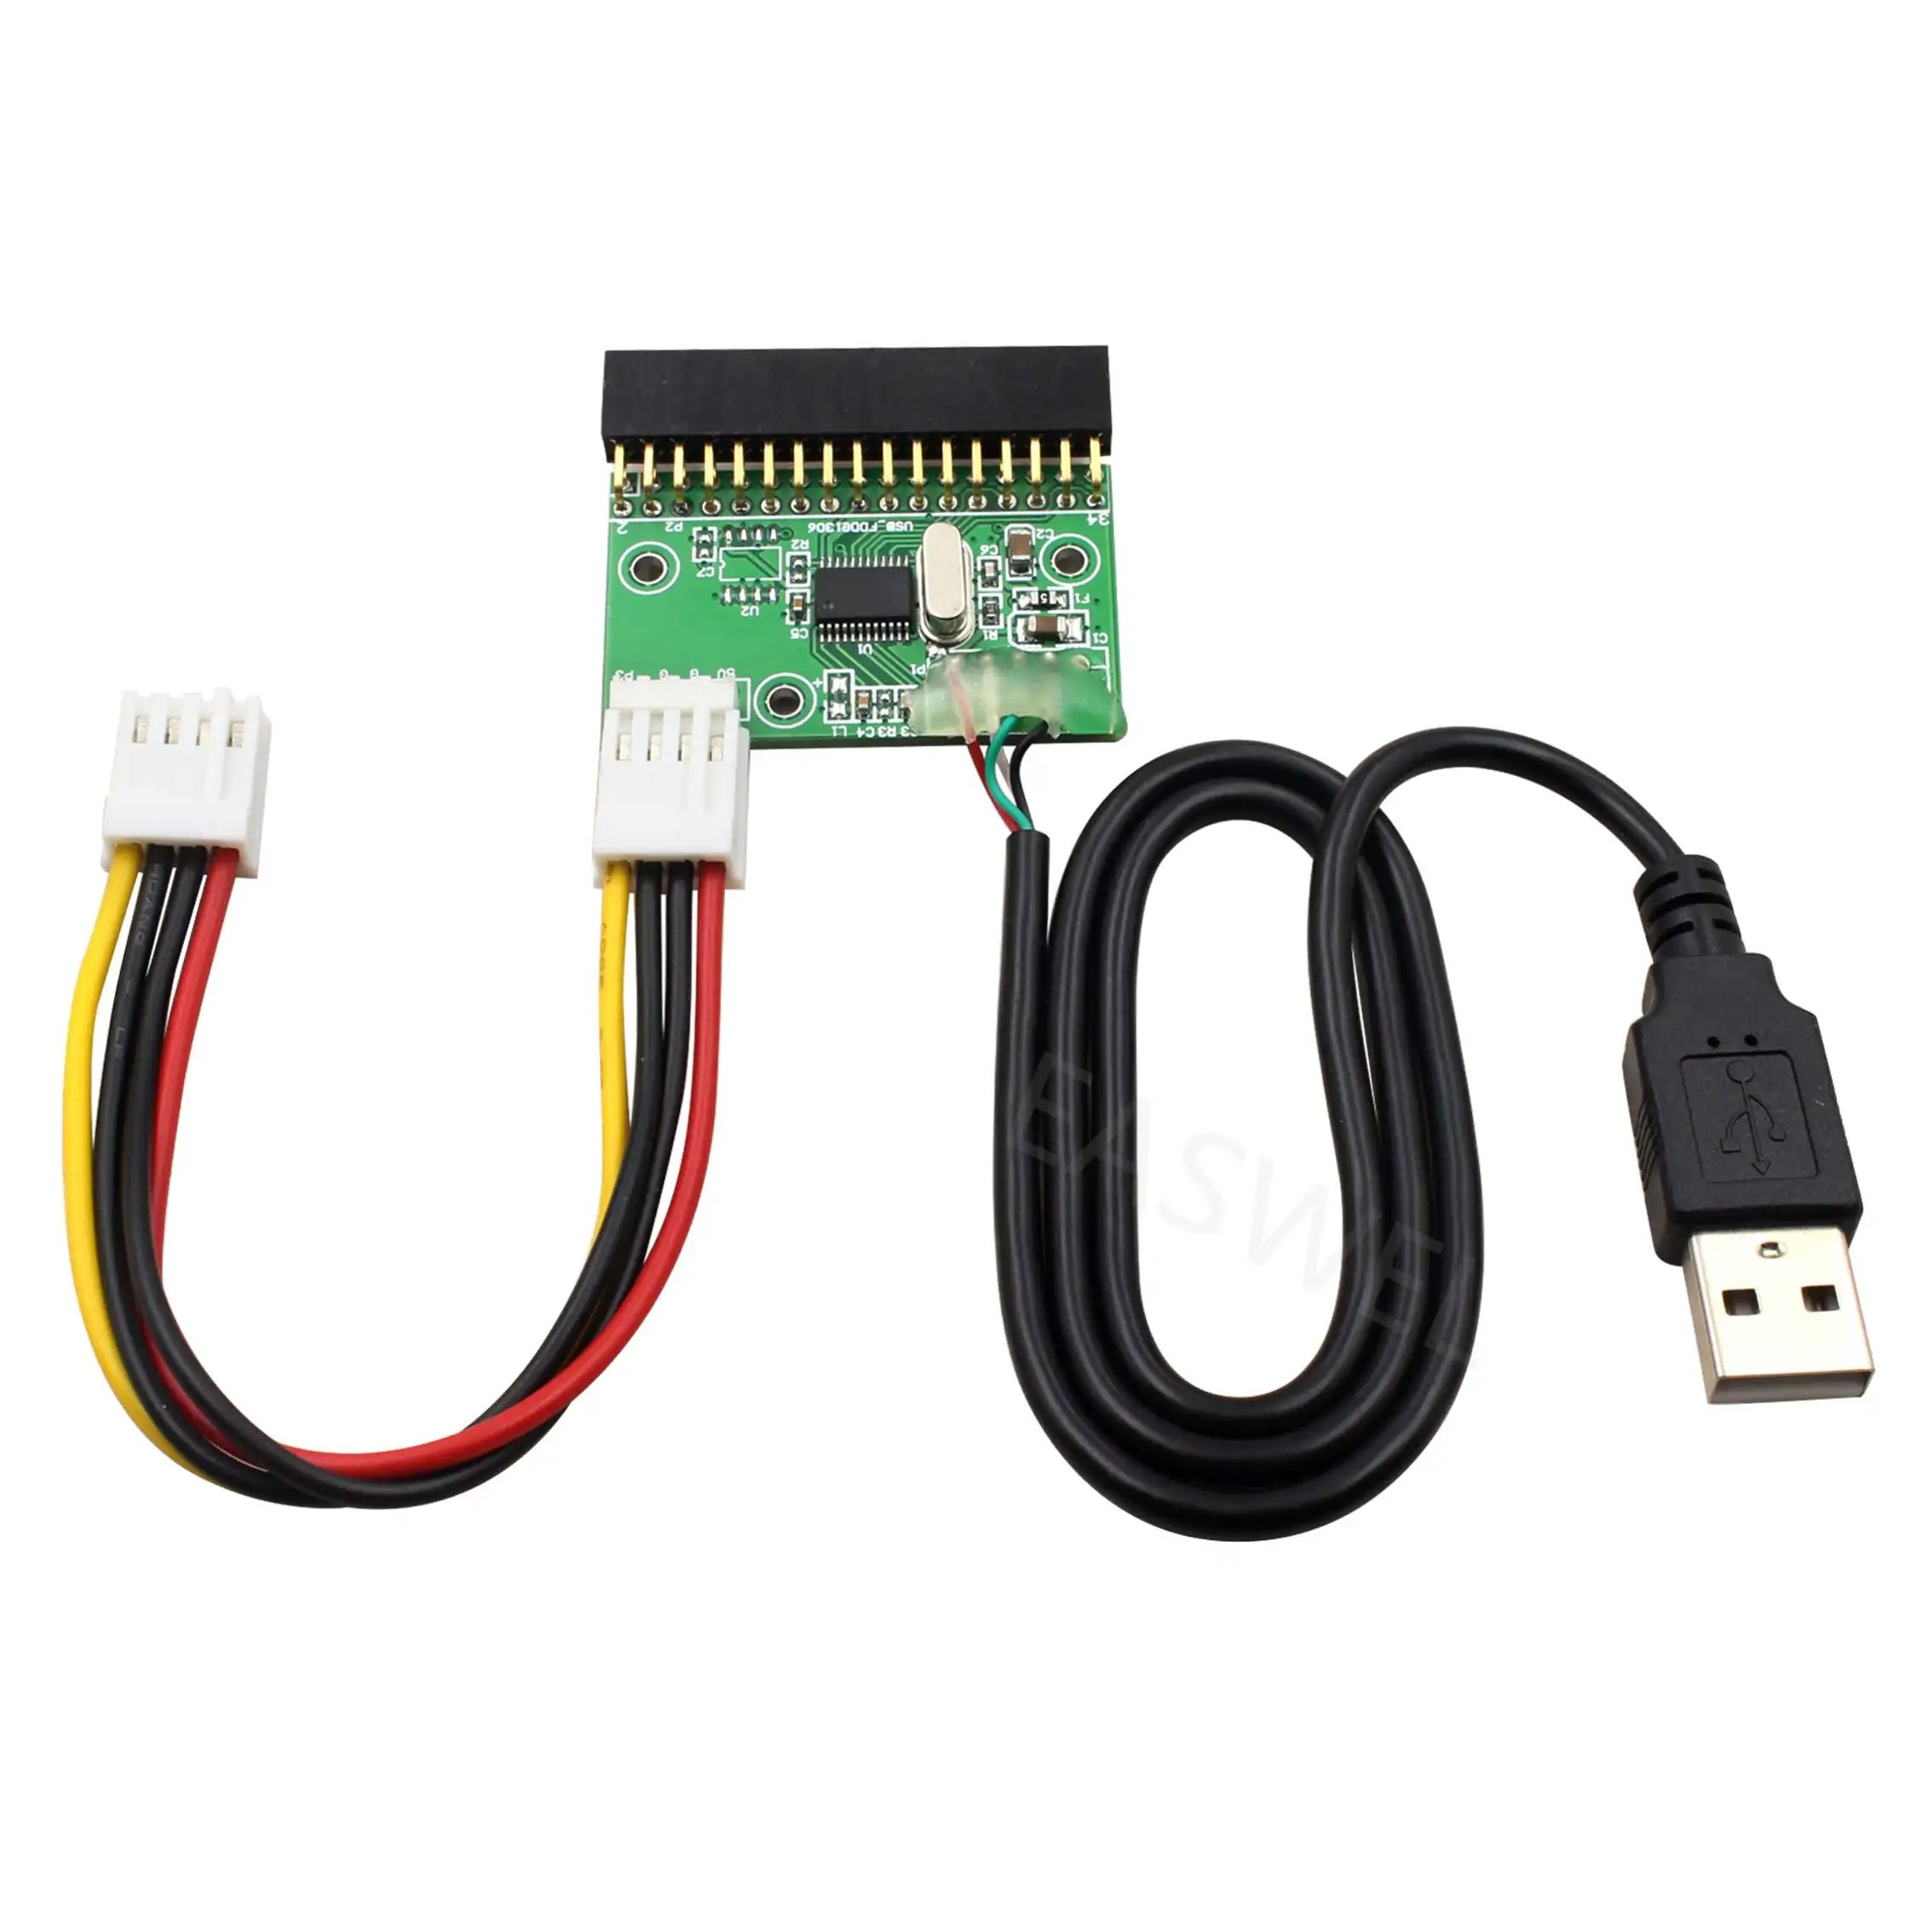 Adaptor Kabel USB, 1.44MB 3.5 "Konektor Floppy Drive 34 PIN 34 P Ke Kabel USB Papan PCB PT